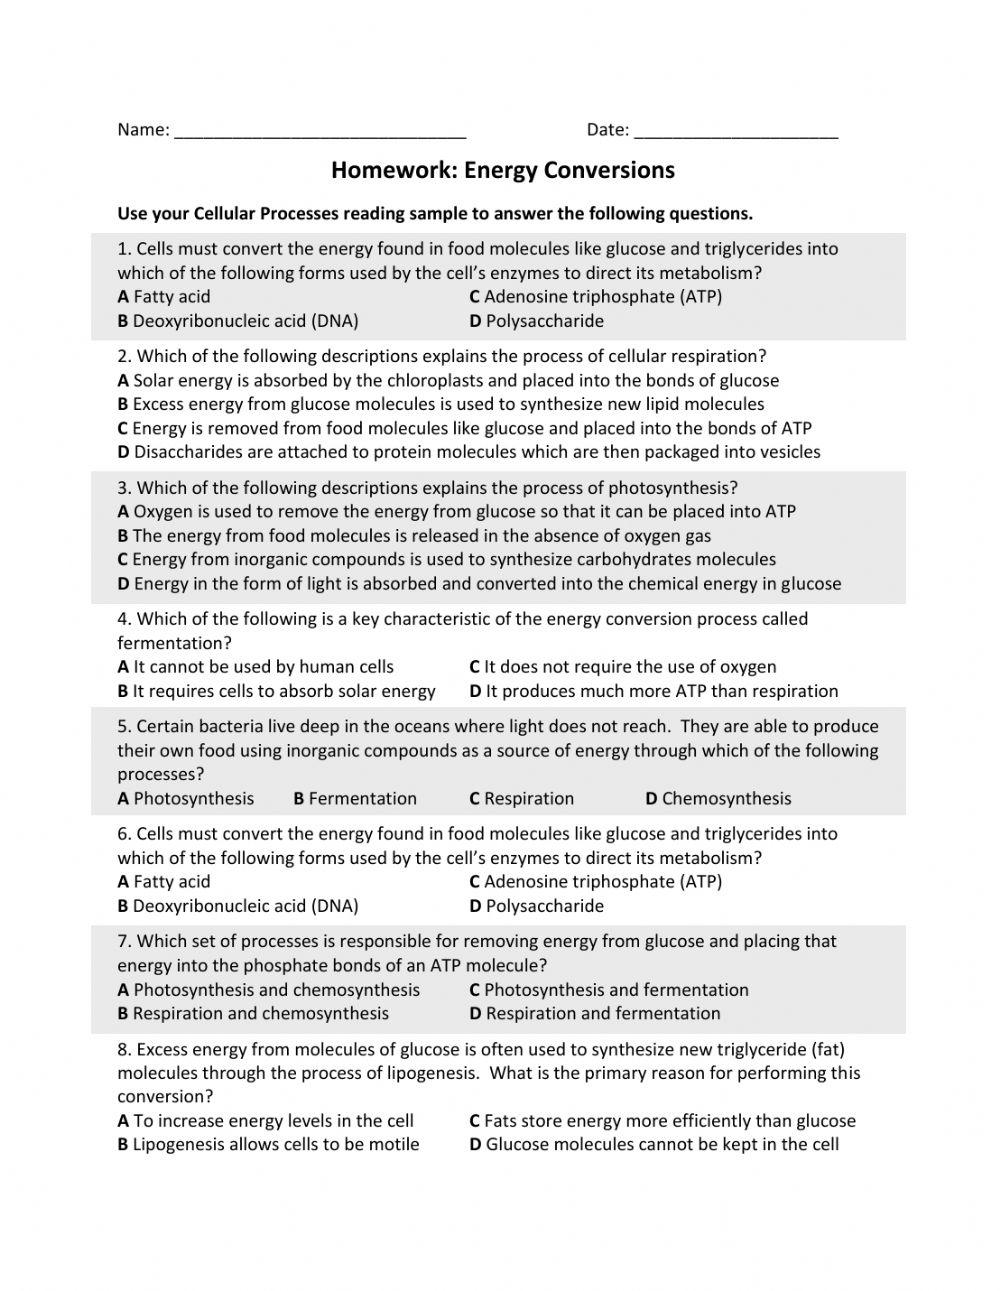 Energy Conversion Homework (Shared)